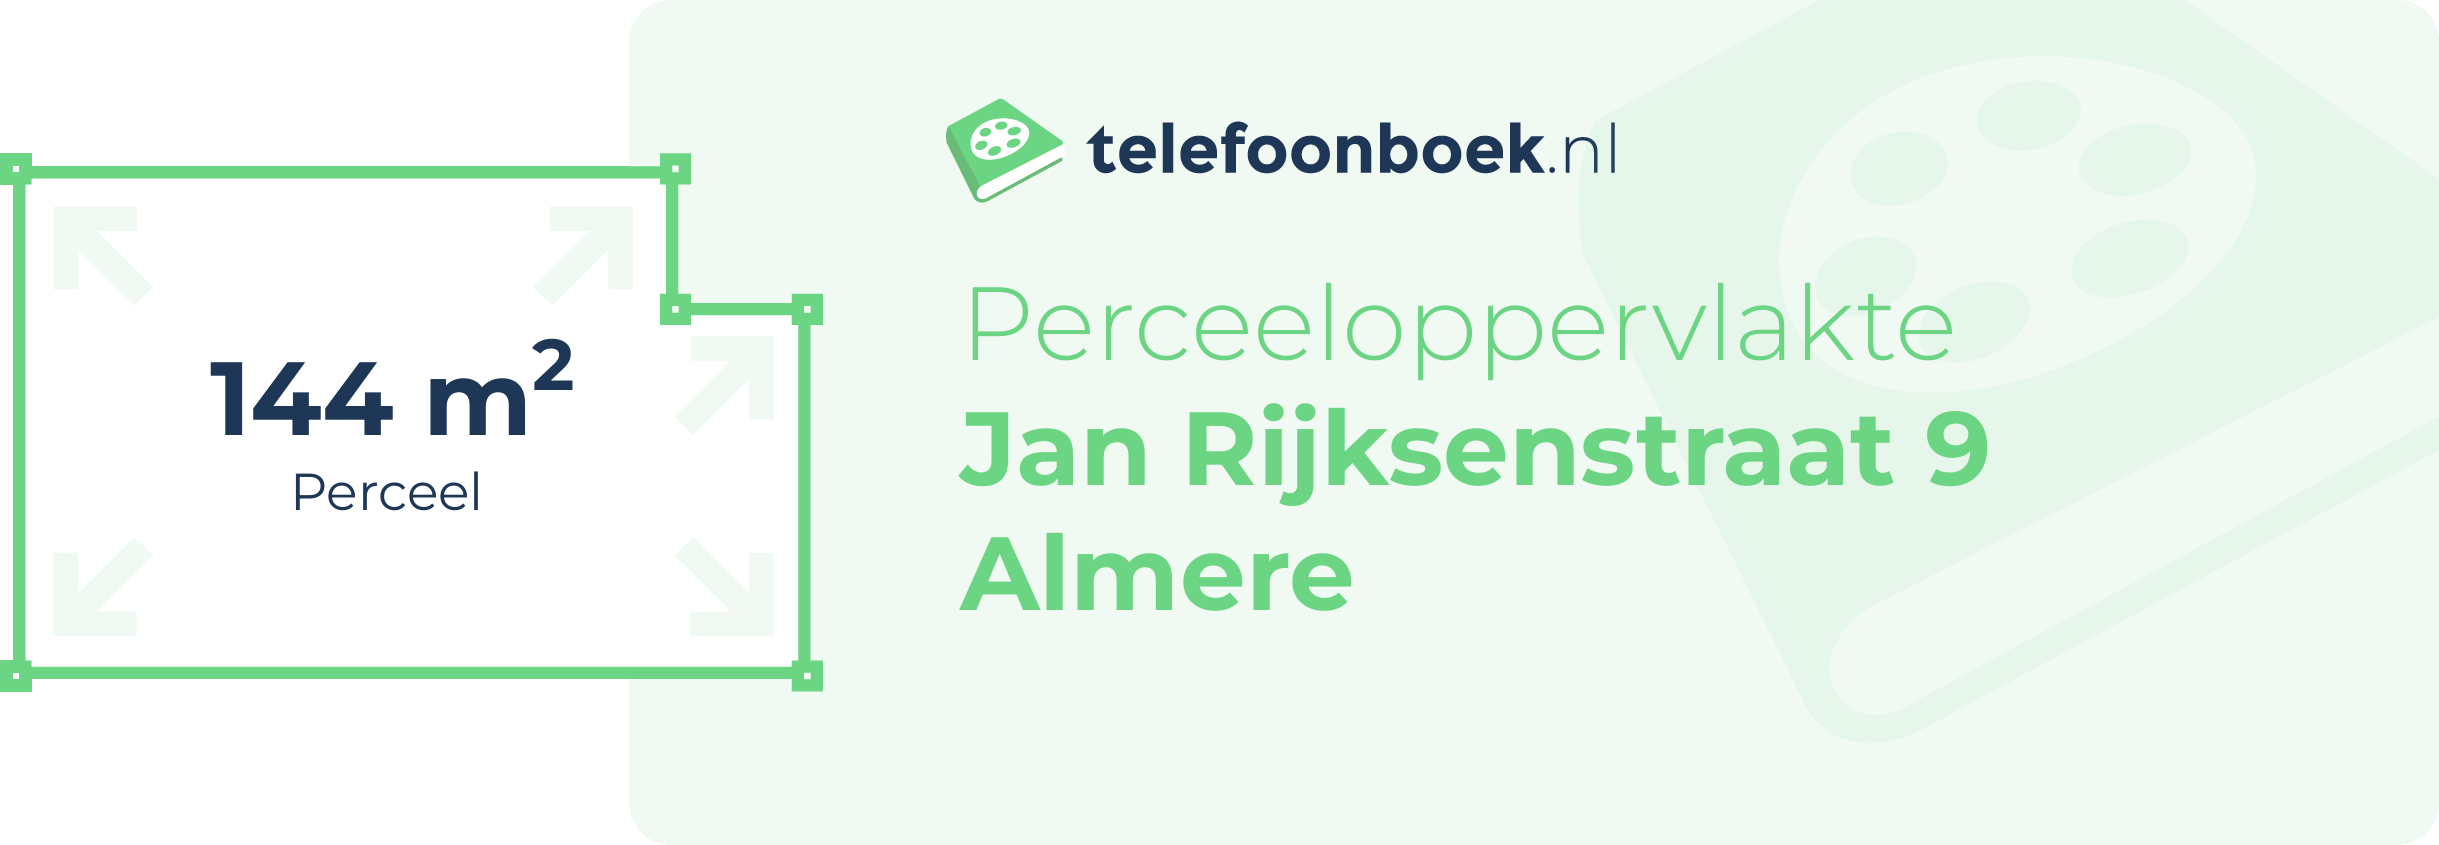 Perceeloppervlakte Jan Rijksenstraat 9 Almere